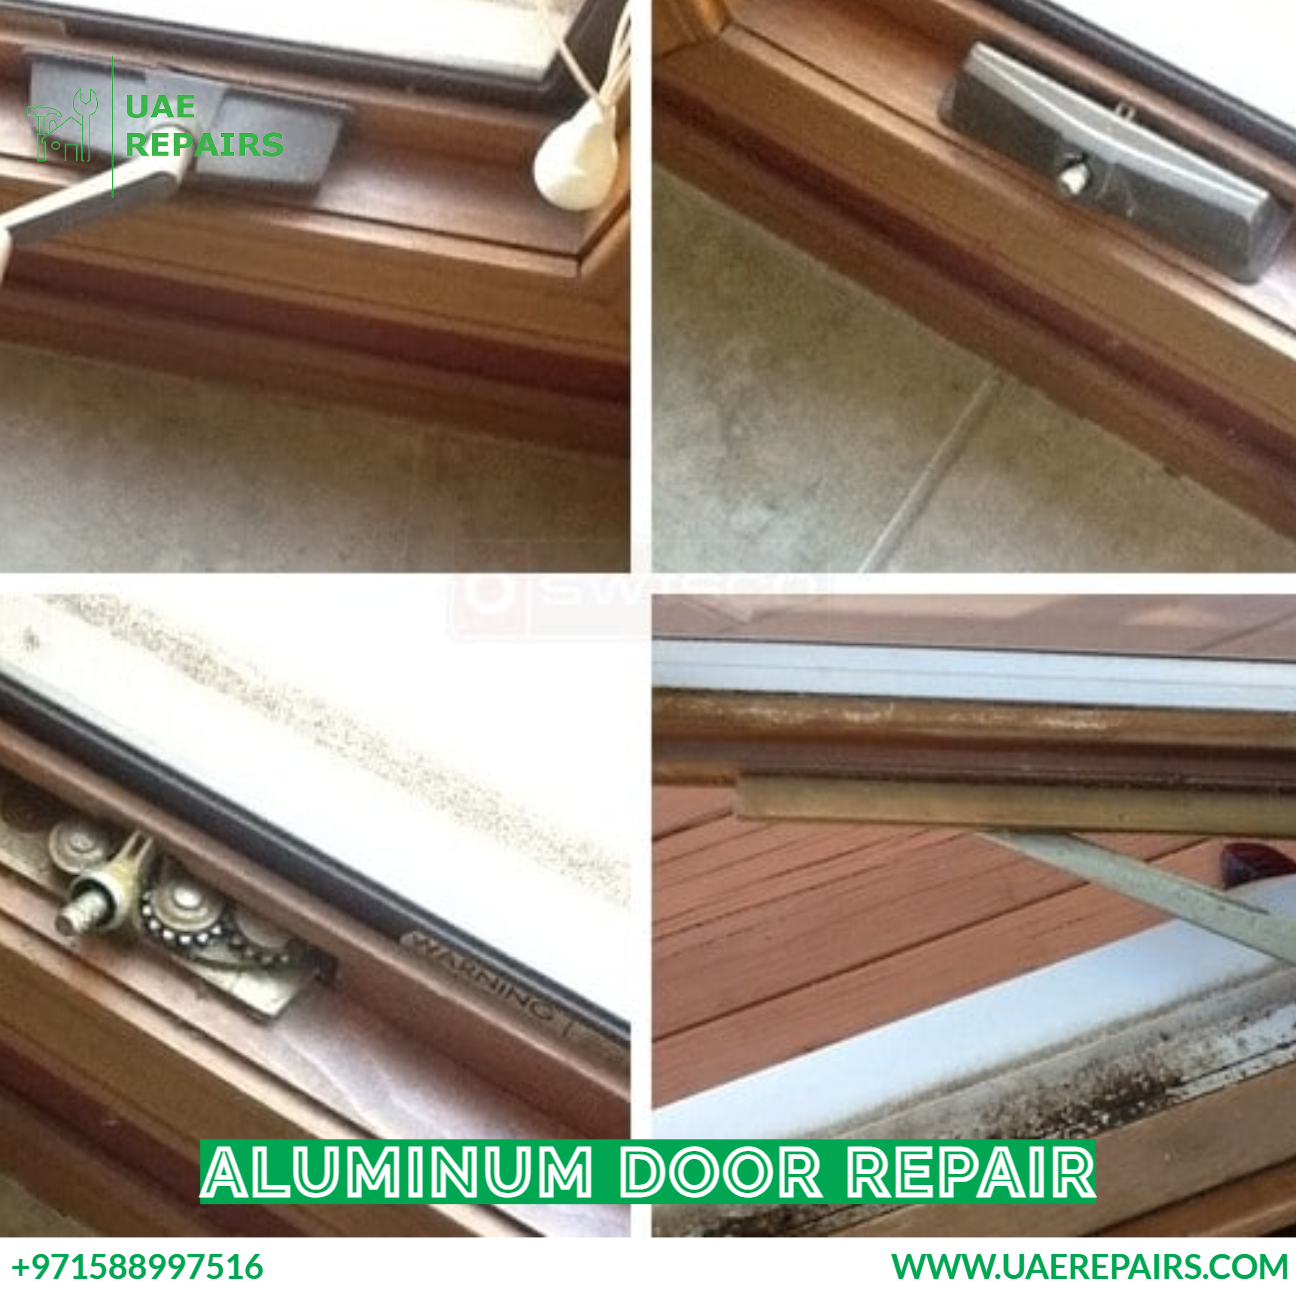 UAE REPAIRS Process of Aluminum door repair CONTACT US 0588997516